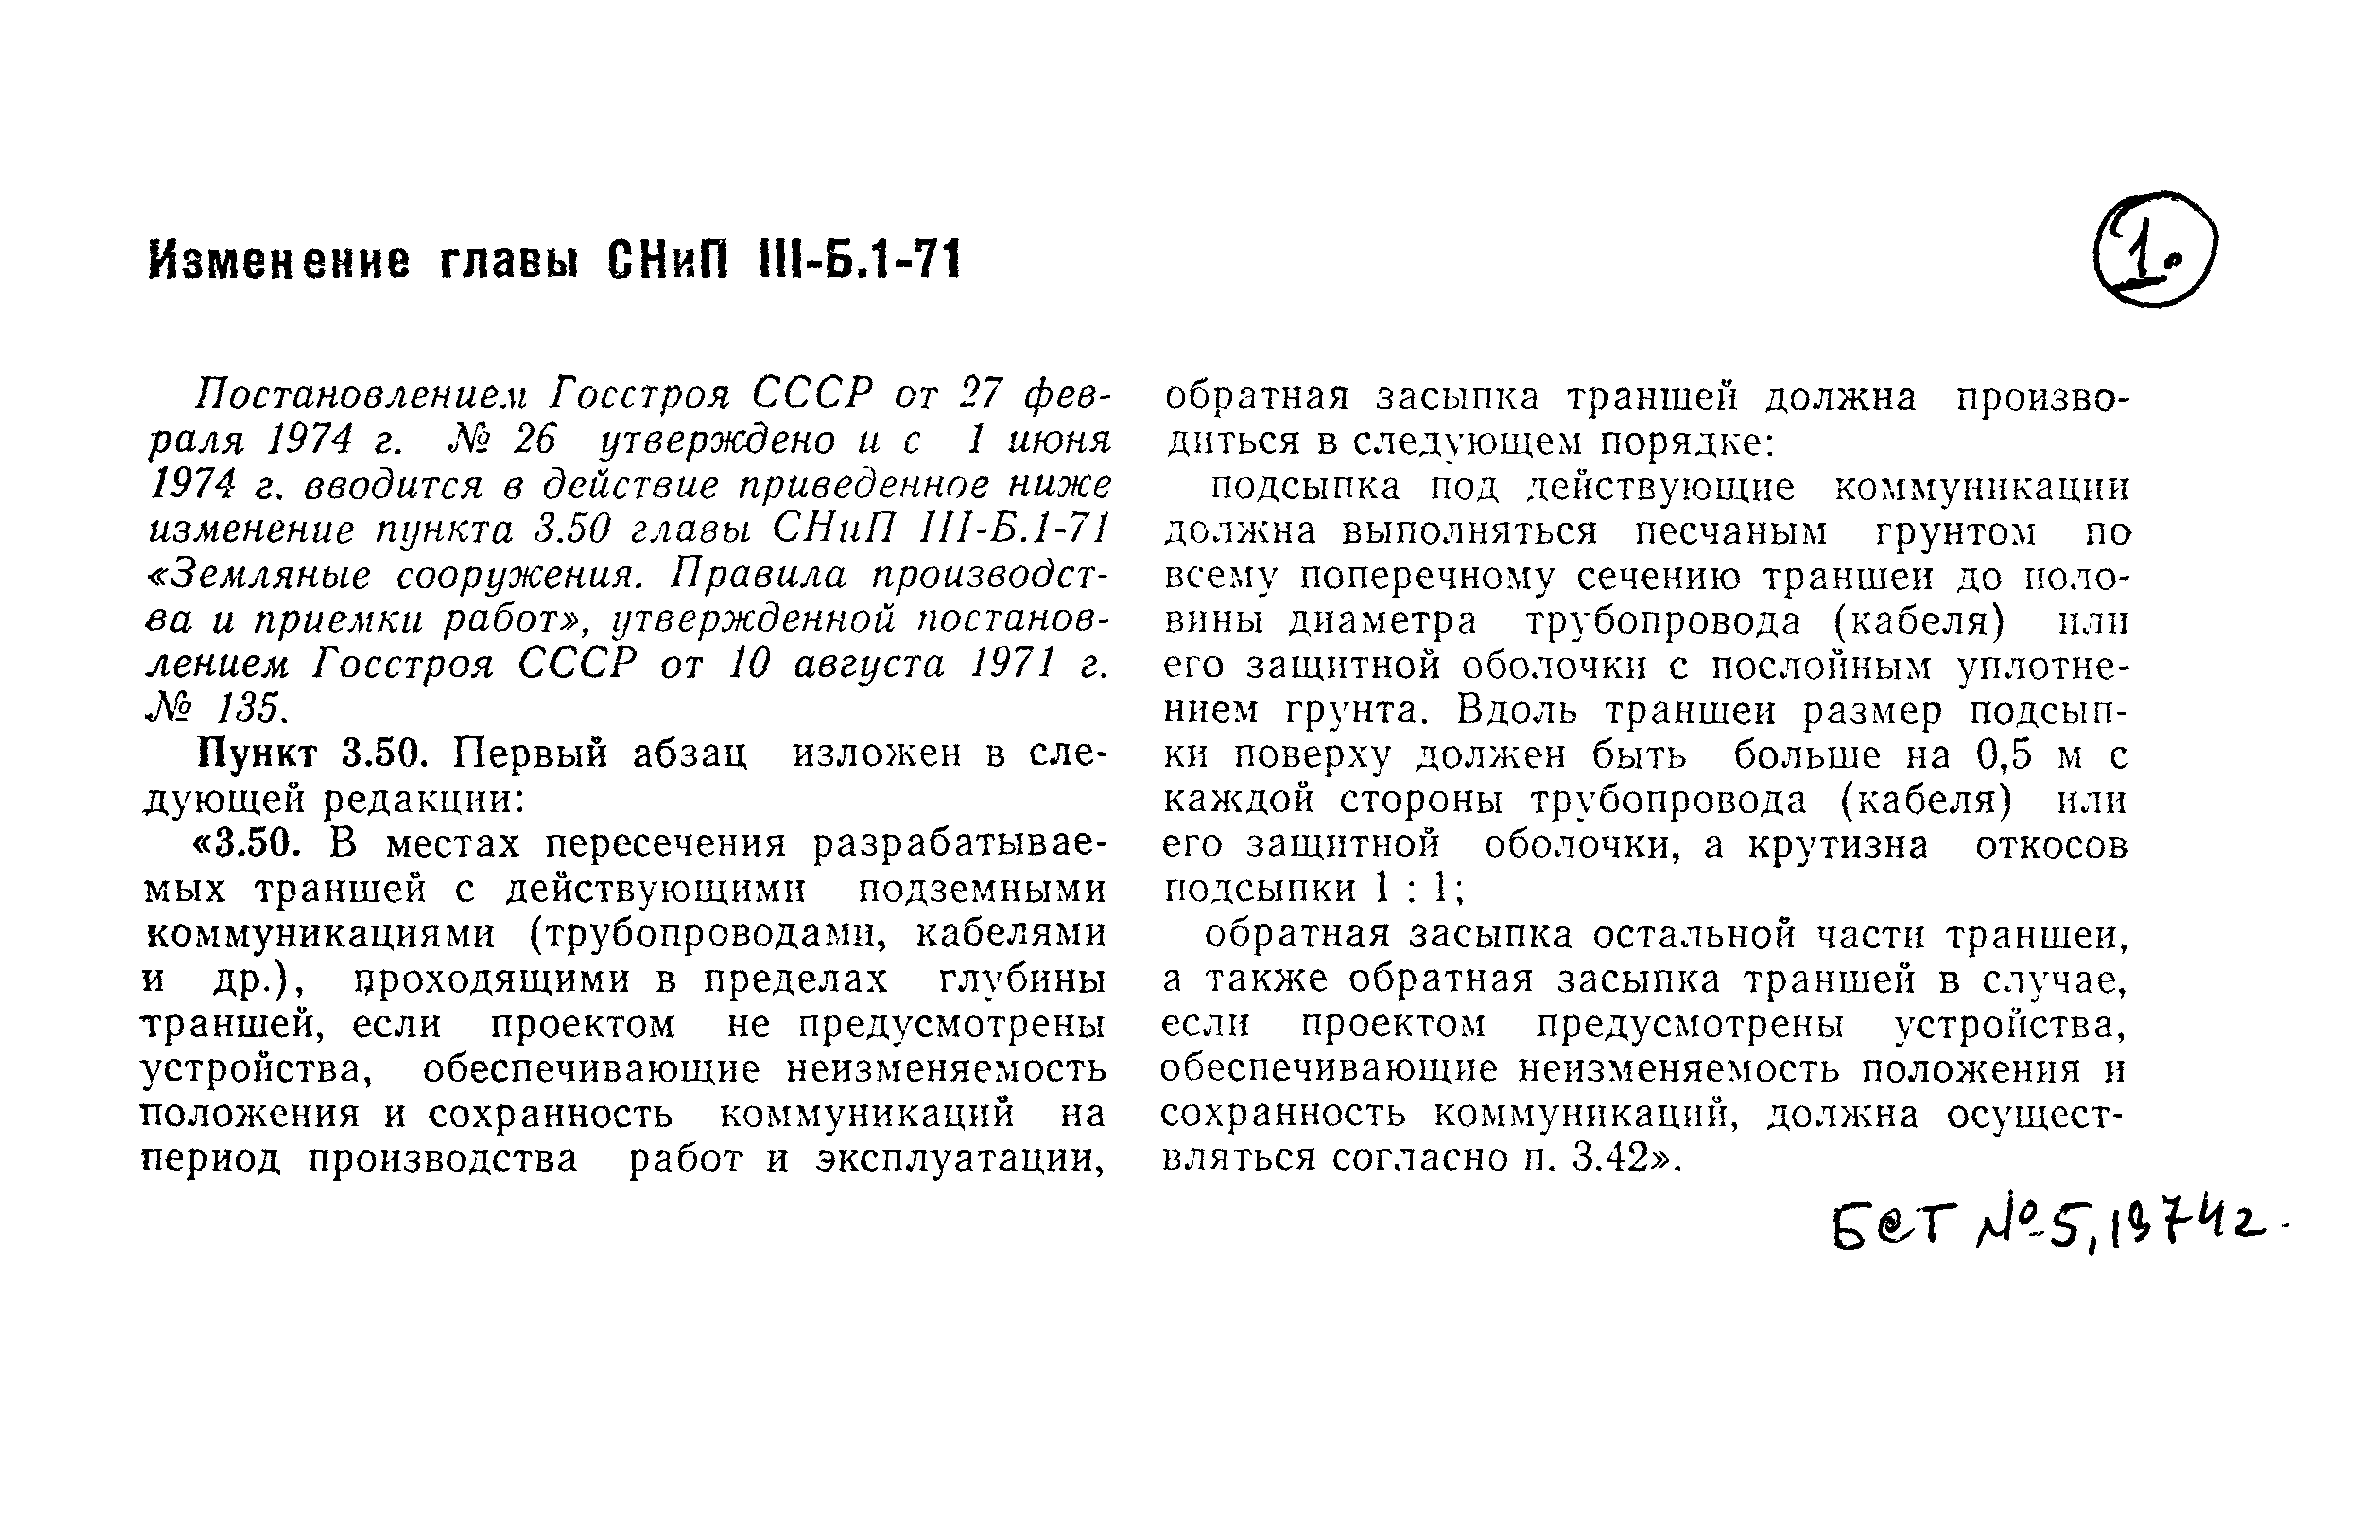 СНиП III-Б.1-71